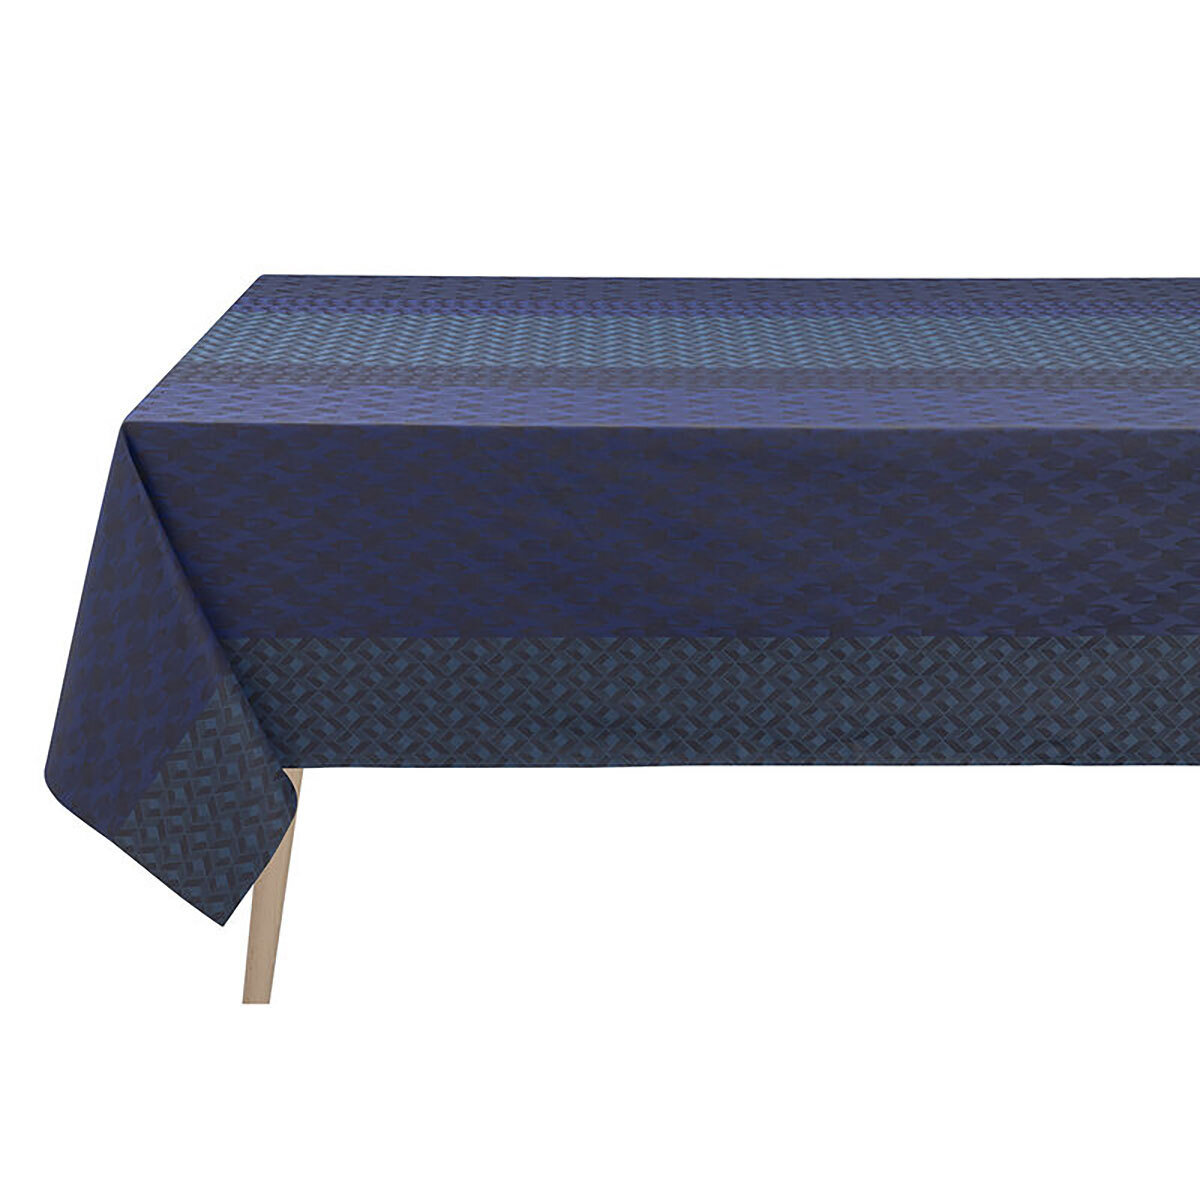 Le Jacquard Francais Tablecloth Caractere Blue 100% Coated Cotton 69 x 69 Inch 28208